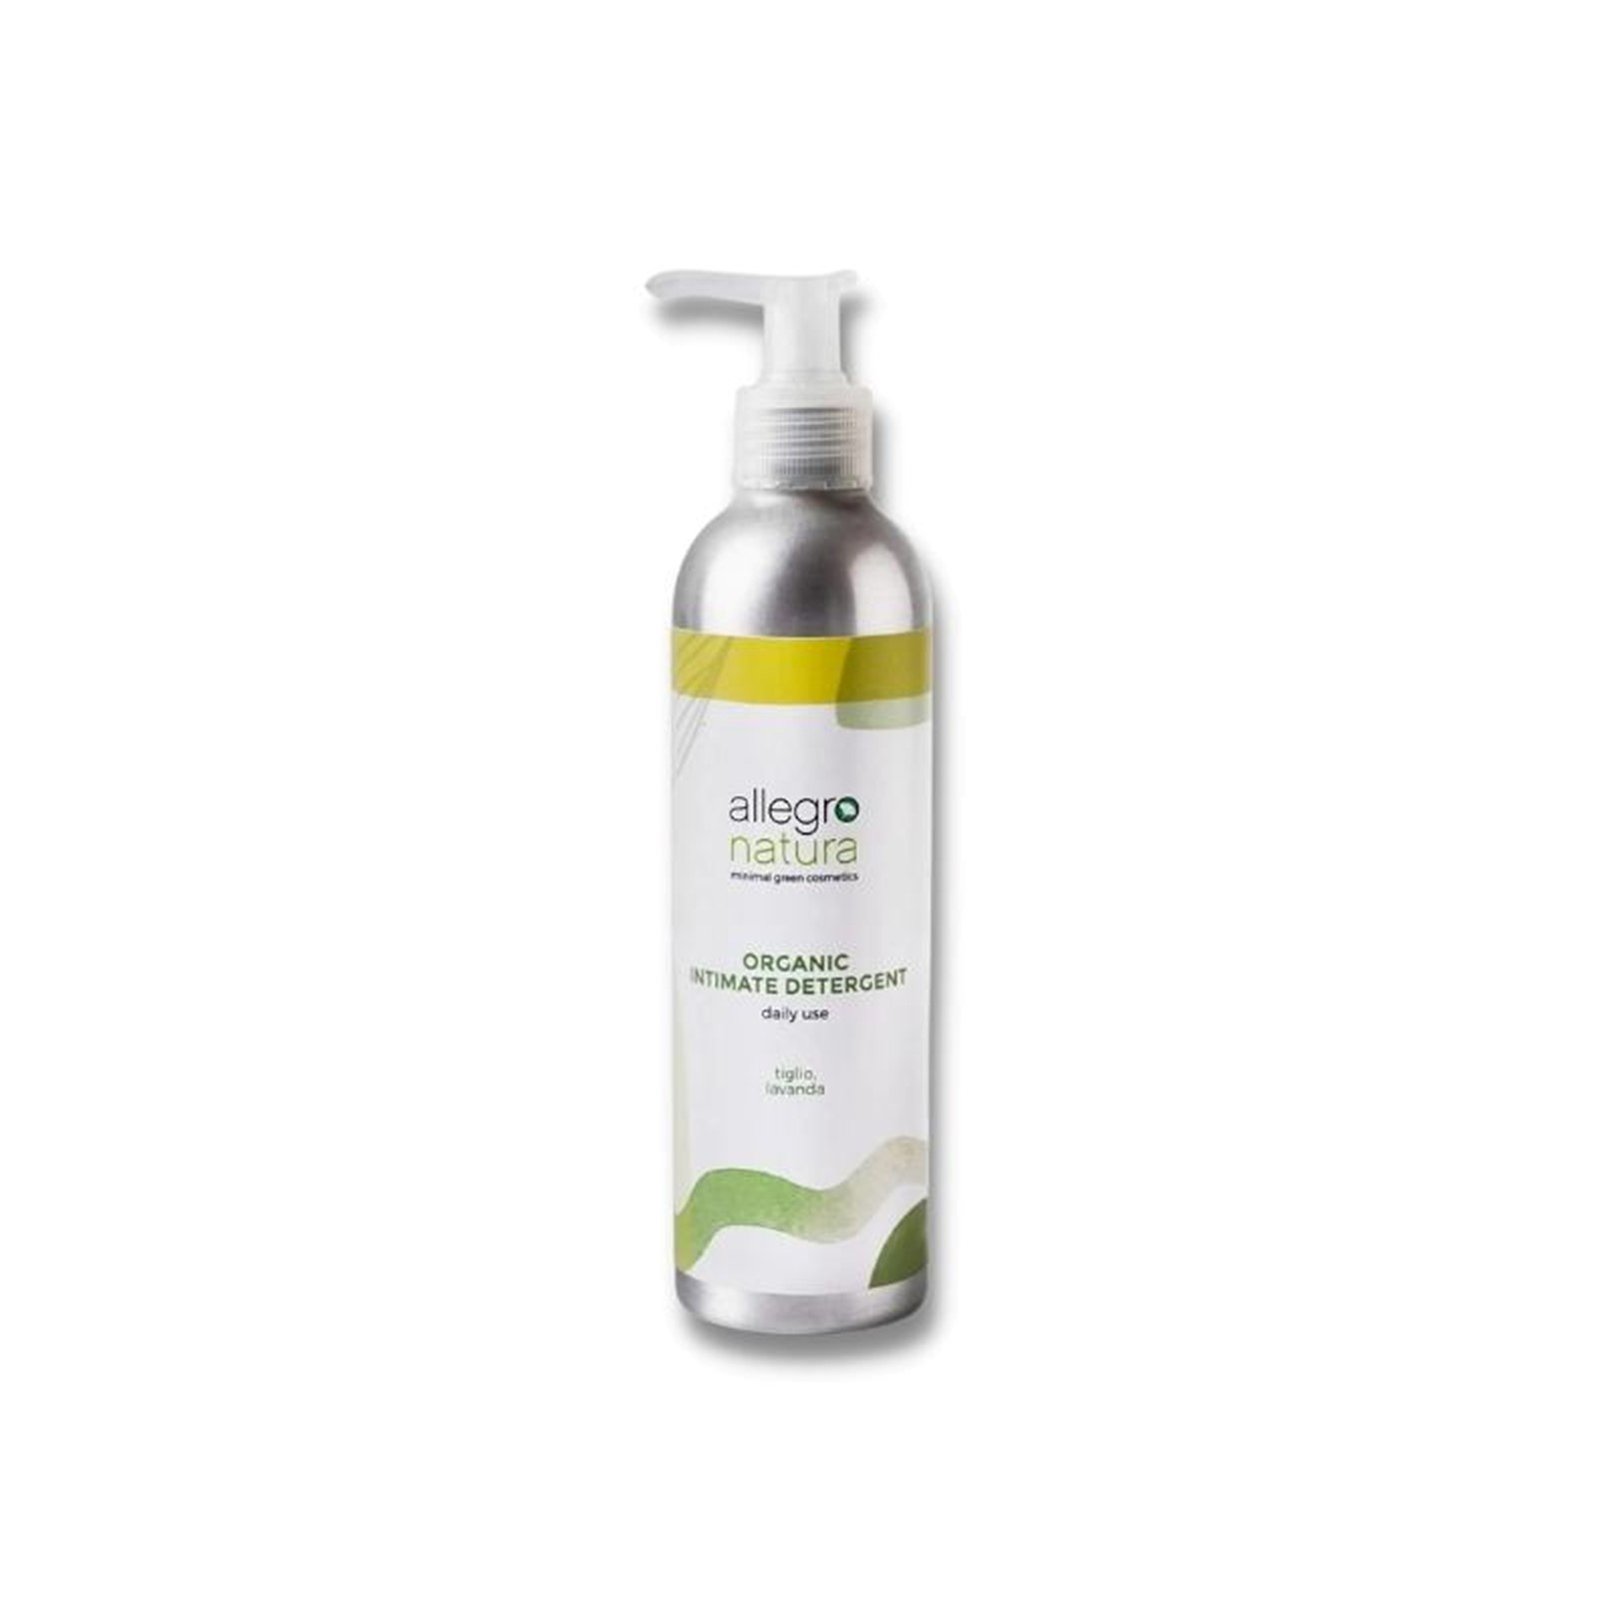 Allegro Natura Organic Intimate Detergent 250ml (8.45 fl oz)